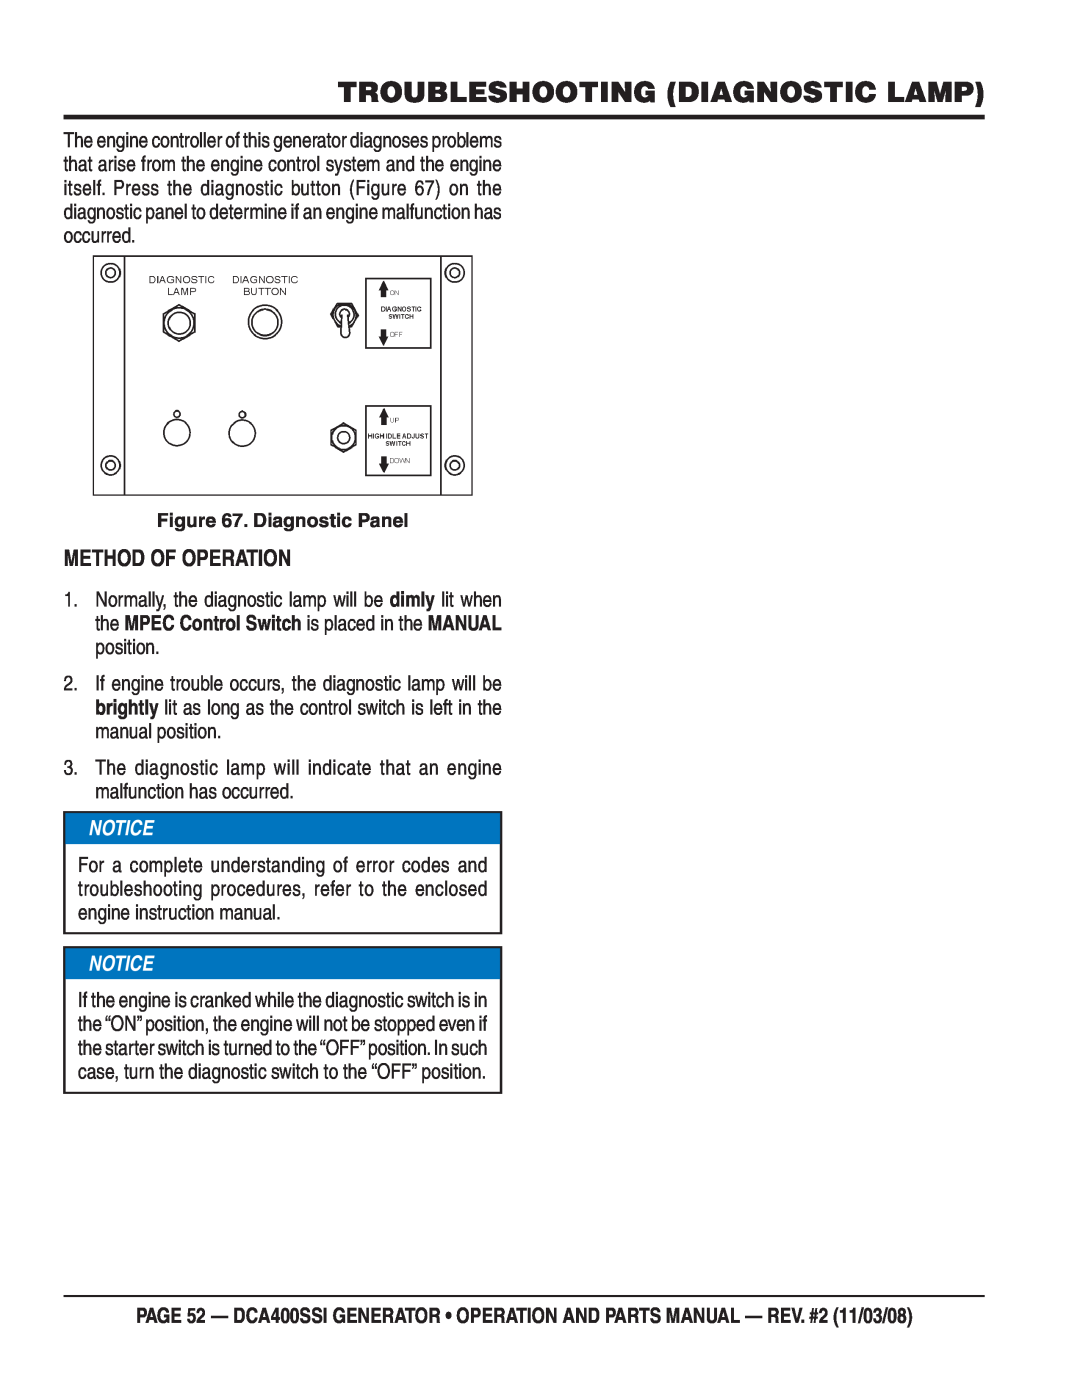 Multiquip DCA400SSI manual Troubleshooting Diagnostic Lamp, Method Of Operation, Notice 